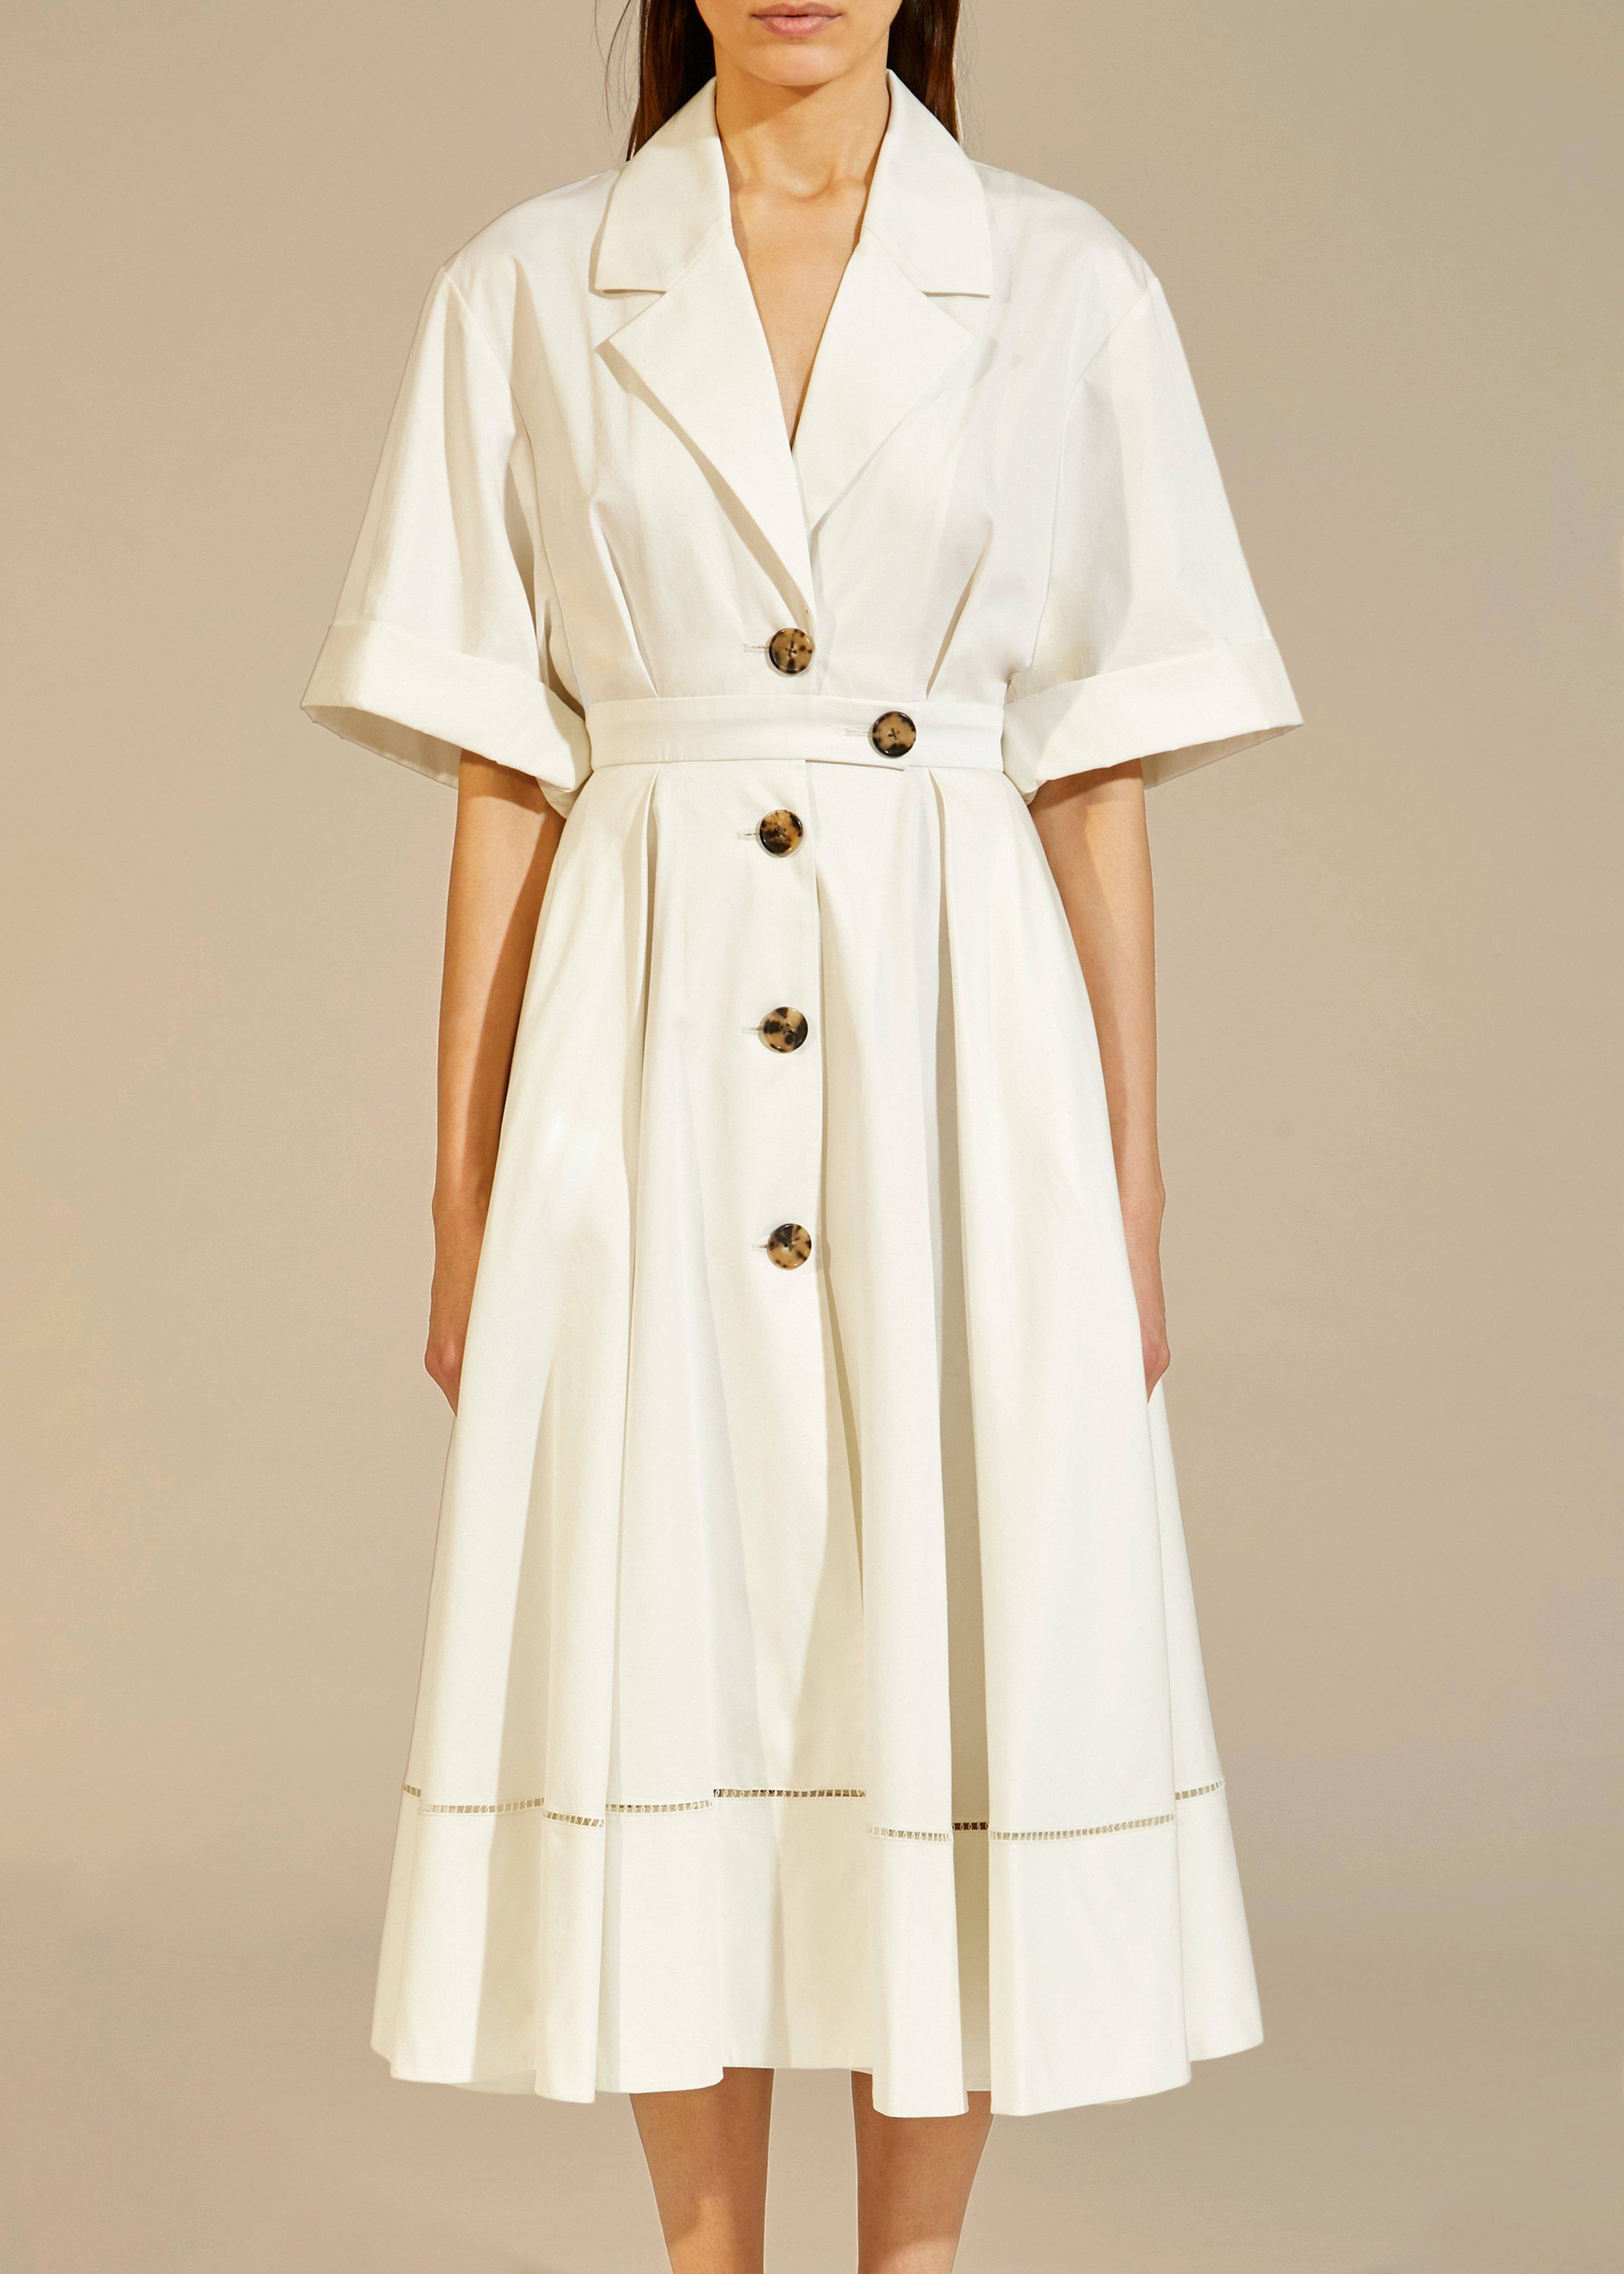 Khaite Cotton The Chloe Dress in White - Lyst